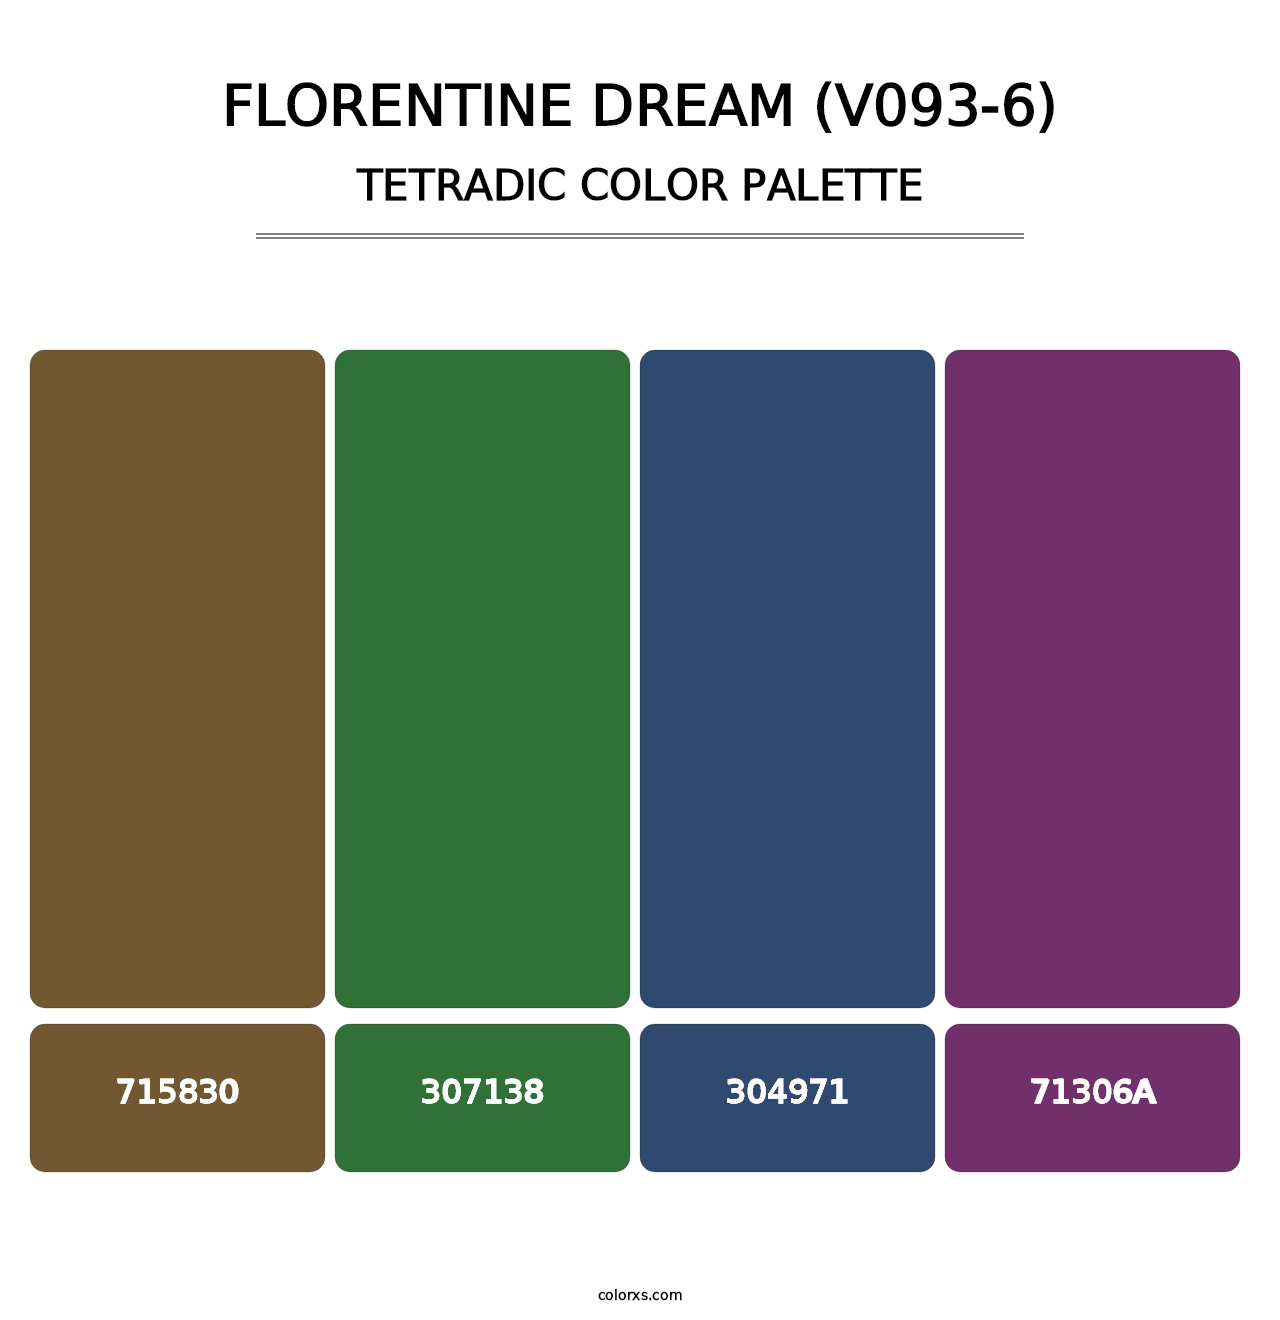 Florentine Dream (V093-6) - Tetradic Color Palette